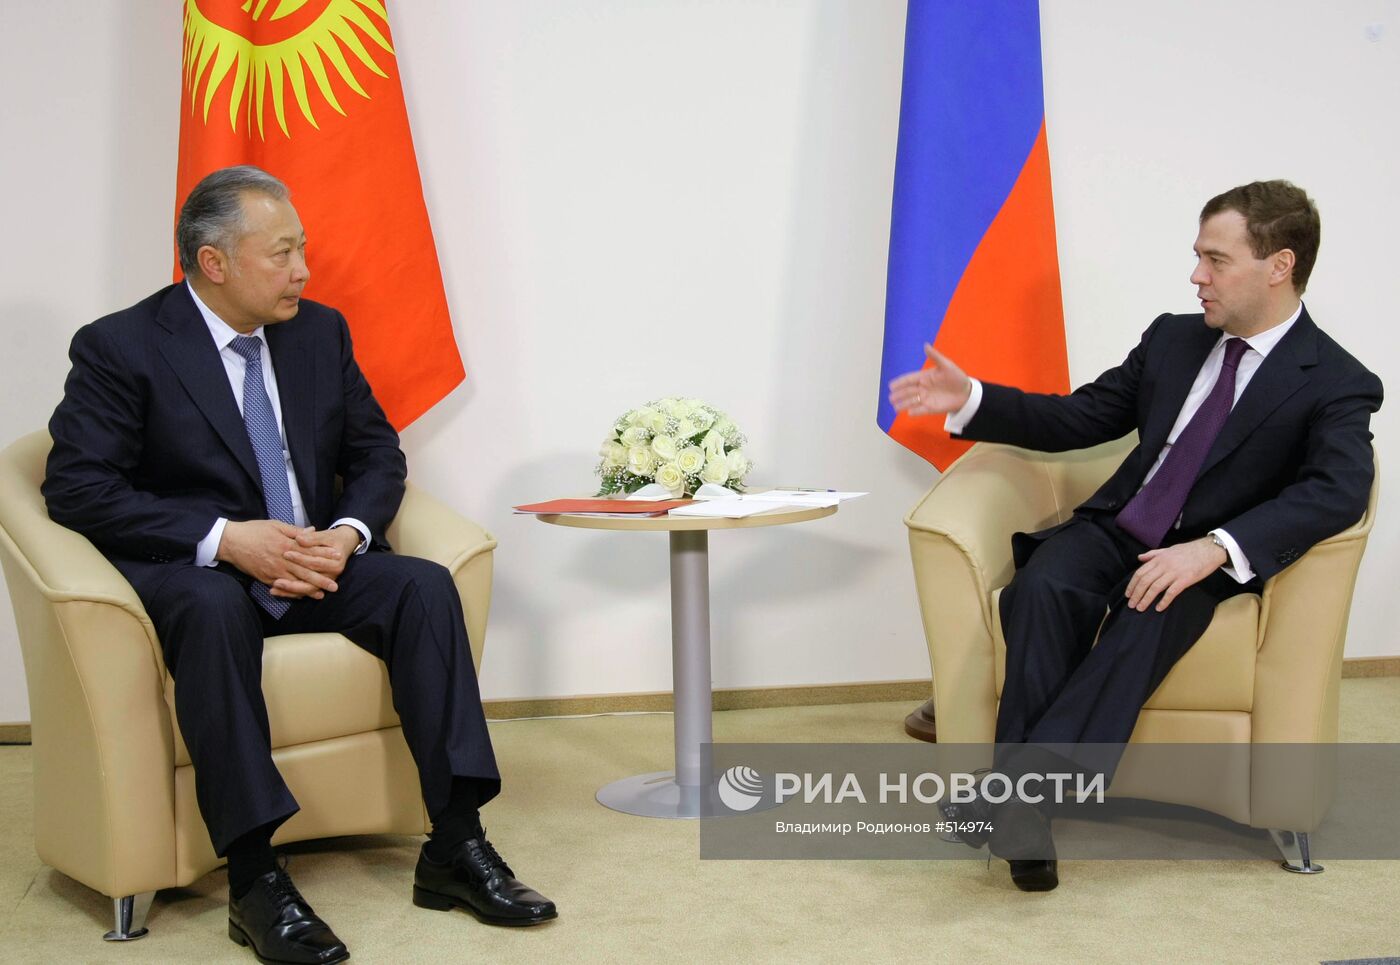 Встреча президентов России и Киргизии в Минске